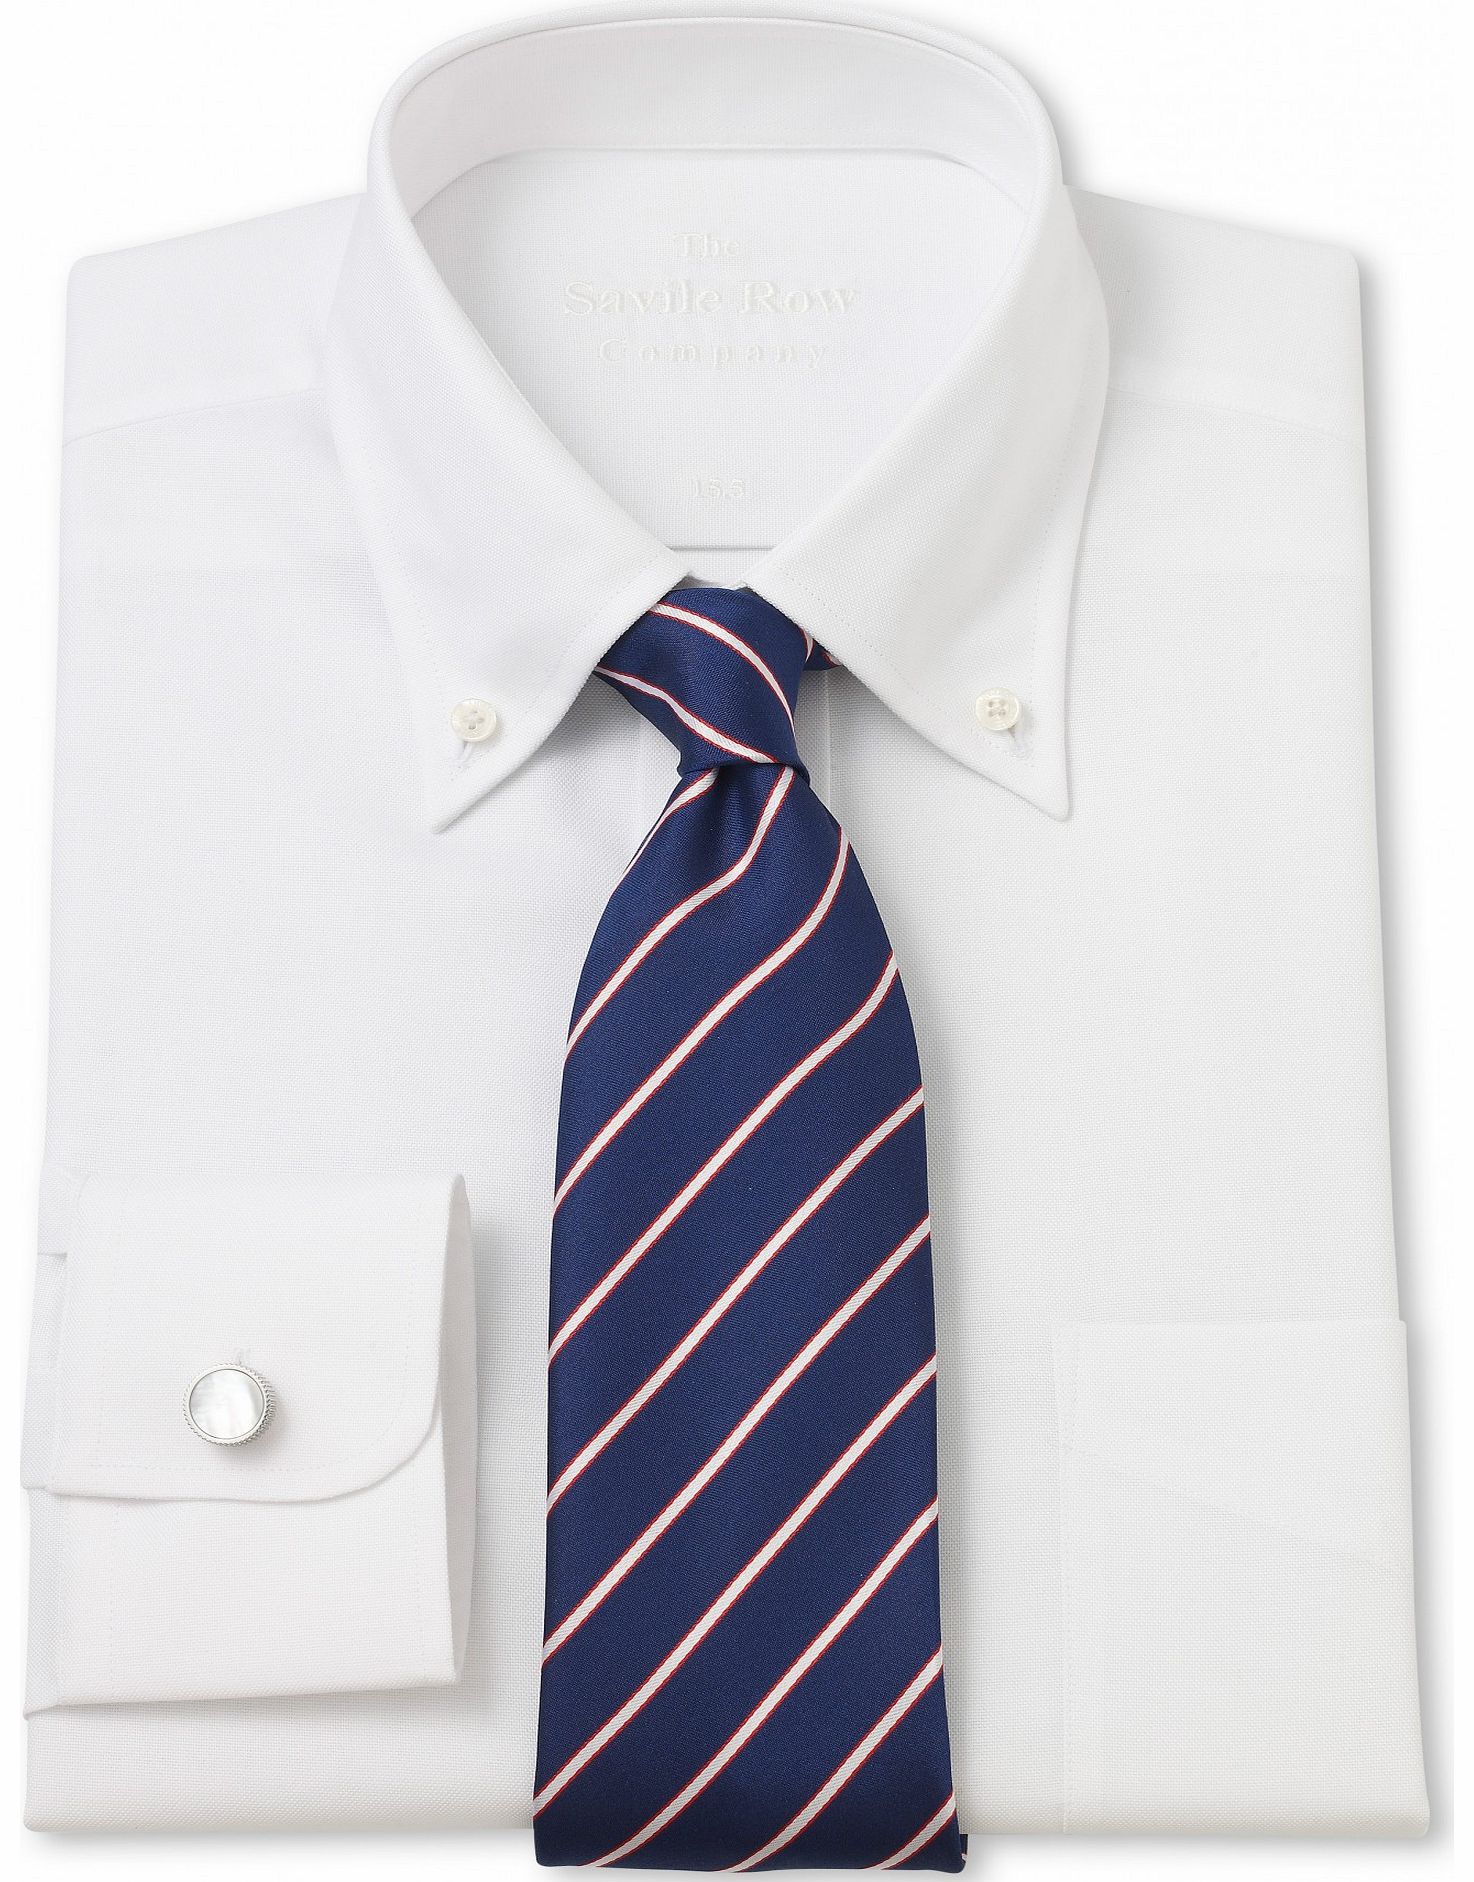 Savile Row Company White Oxford Button Down Classic Shirt 17 1/2``